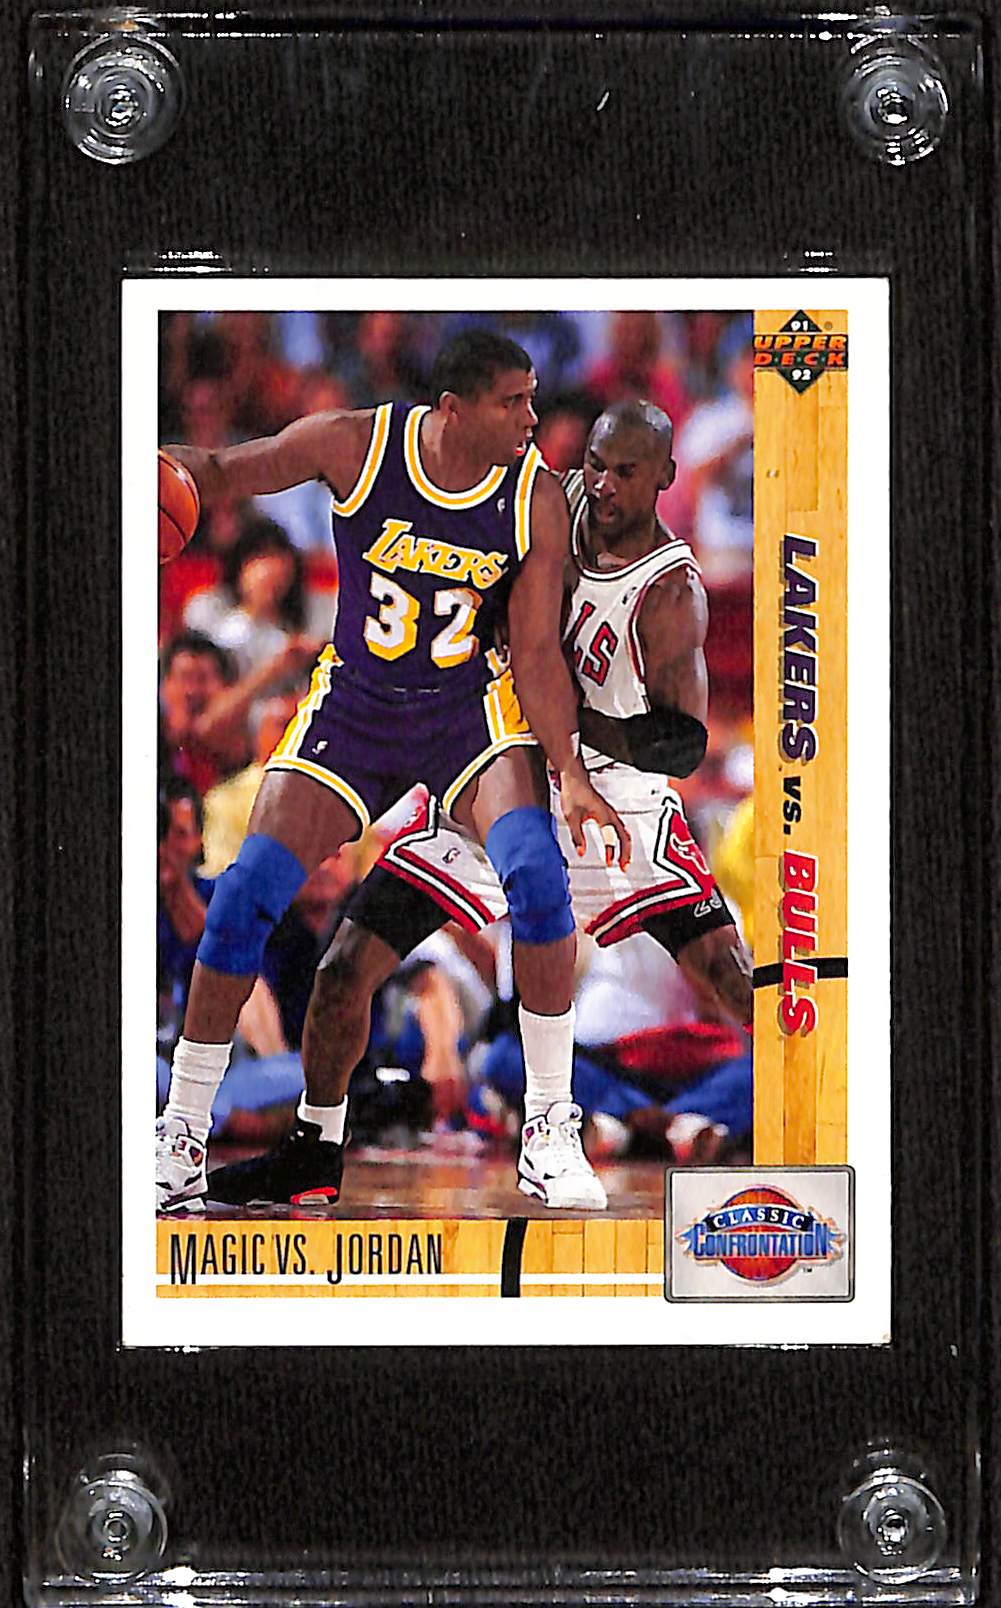 FIINR BasketBall Card 1991 Upper Deck Magic Johnson Vs Michael Jordan NBA Basketball Card #34 - Mint Condition